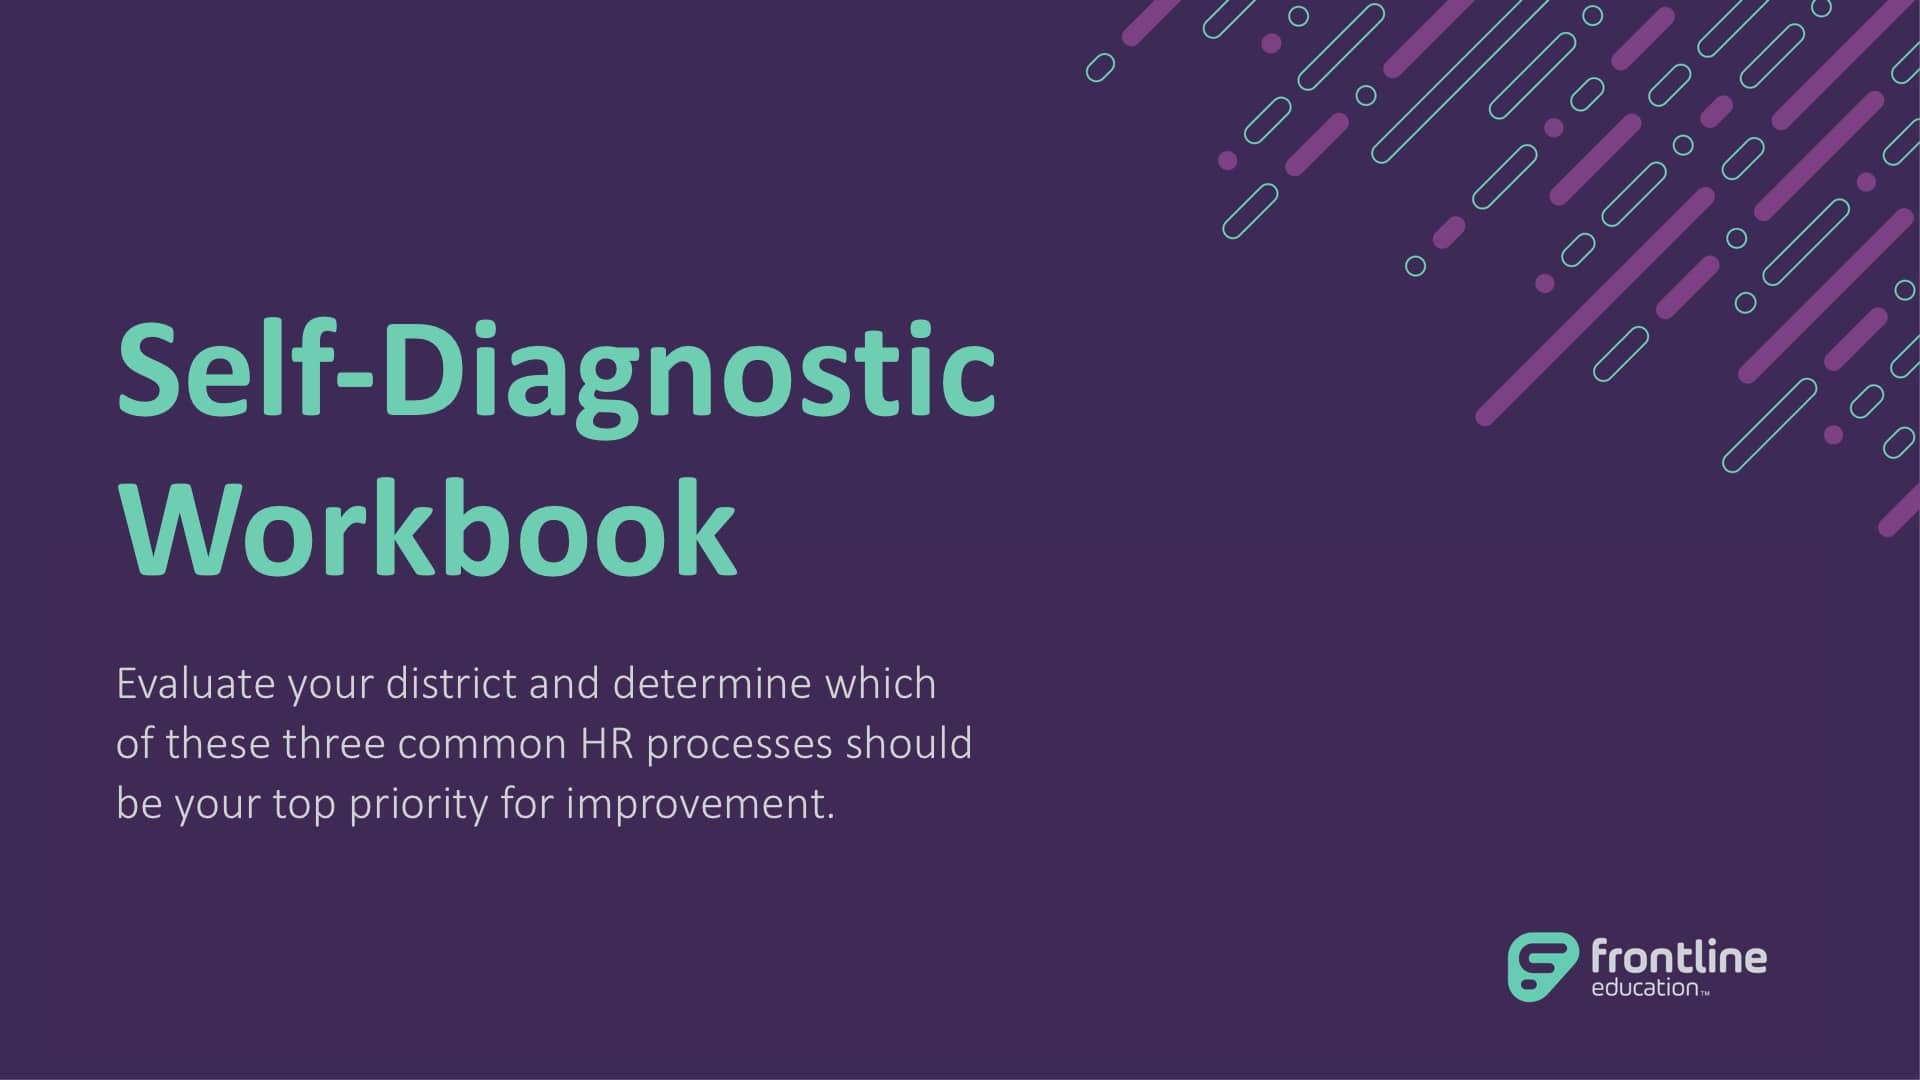 Self-Diagnostic Workbook Powerpoint